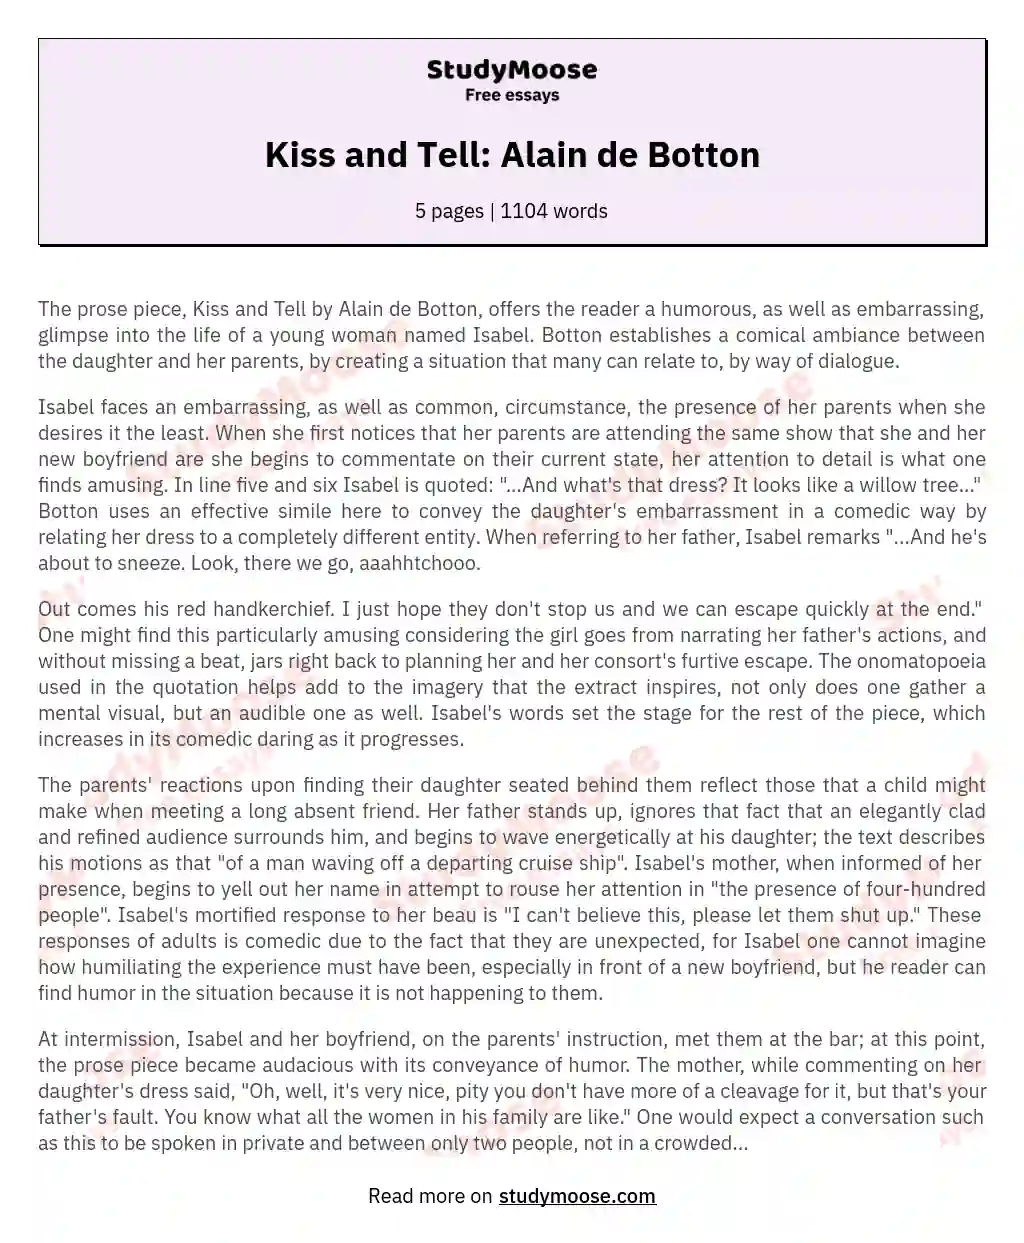 Kiss and Tell: Alain de Botton essay